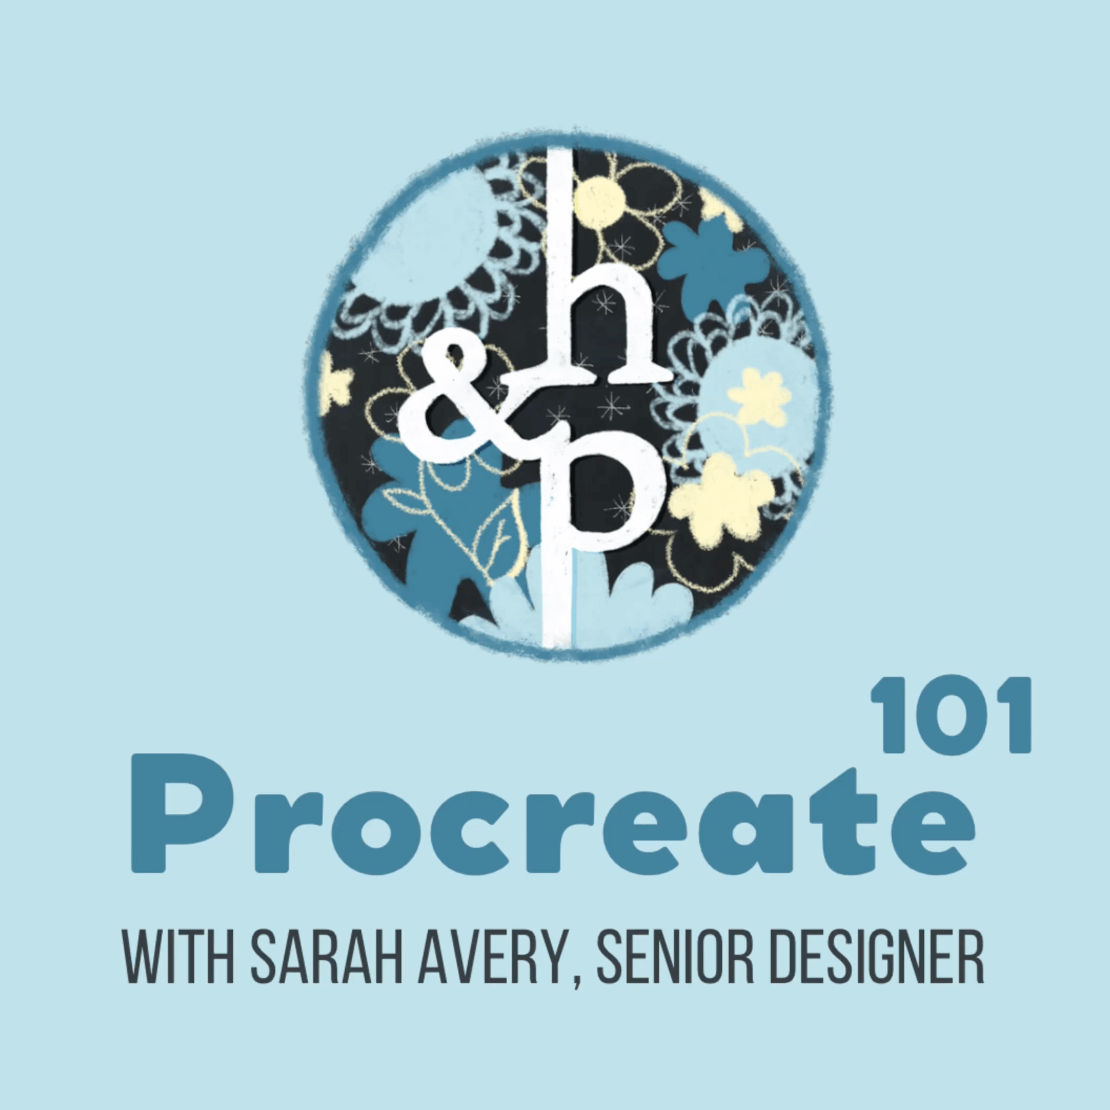 Procreate 101 with Sarah Avery, Senior Designer